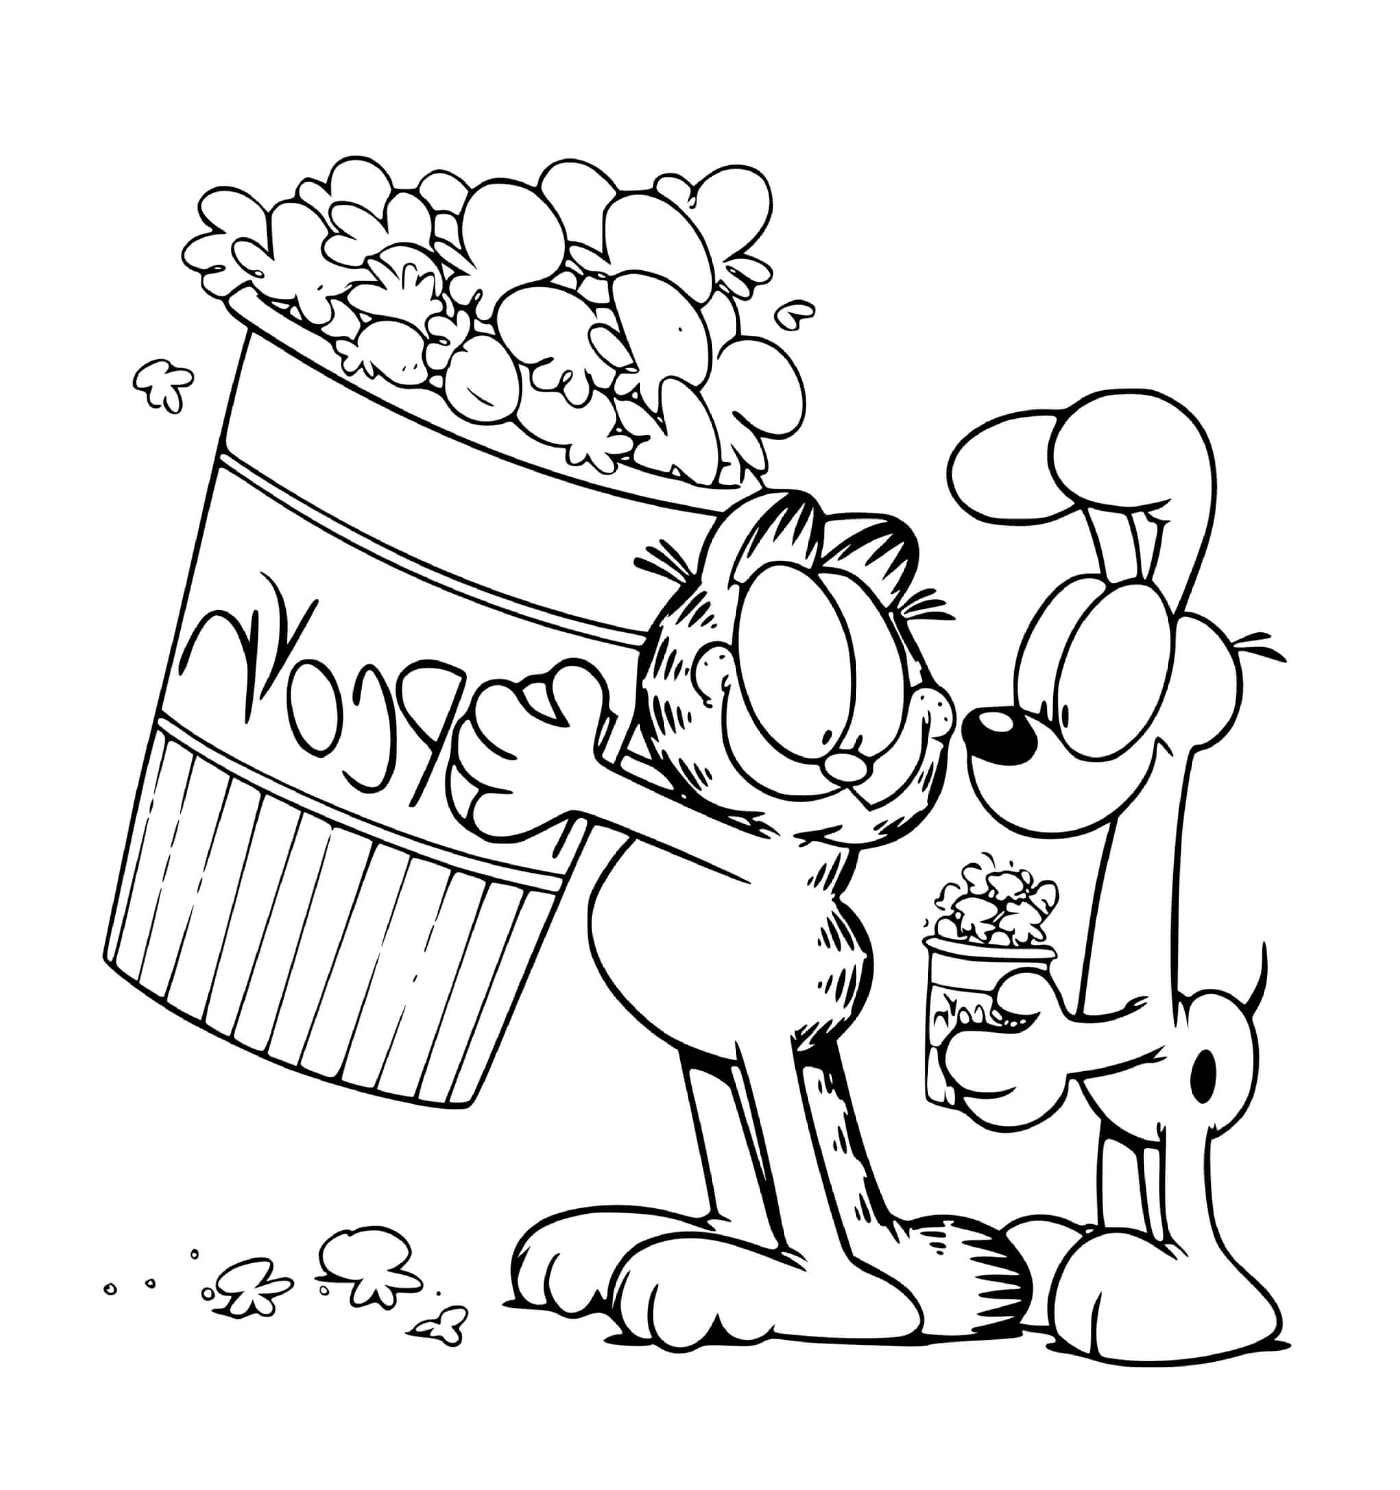  Garfield and Odie share popcorn 